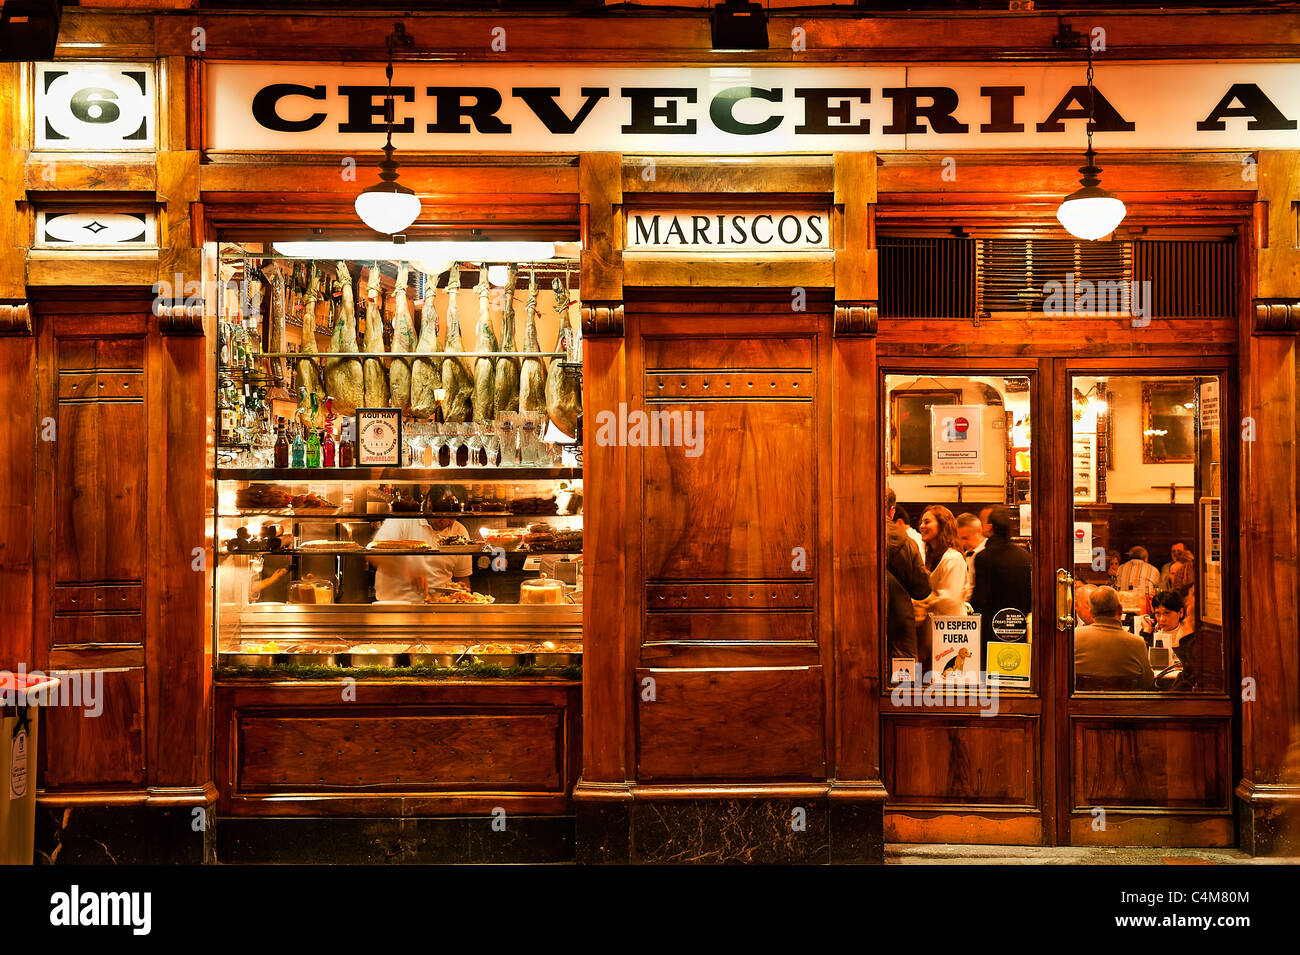 Cerveceria Alemana tapas restaurant and bar, Madrid, Spain Stock Photo